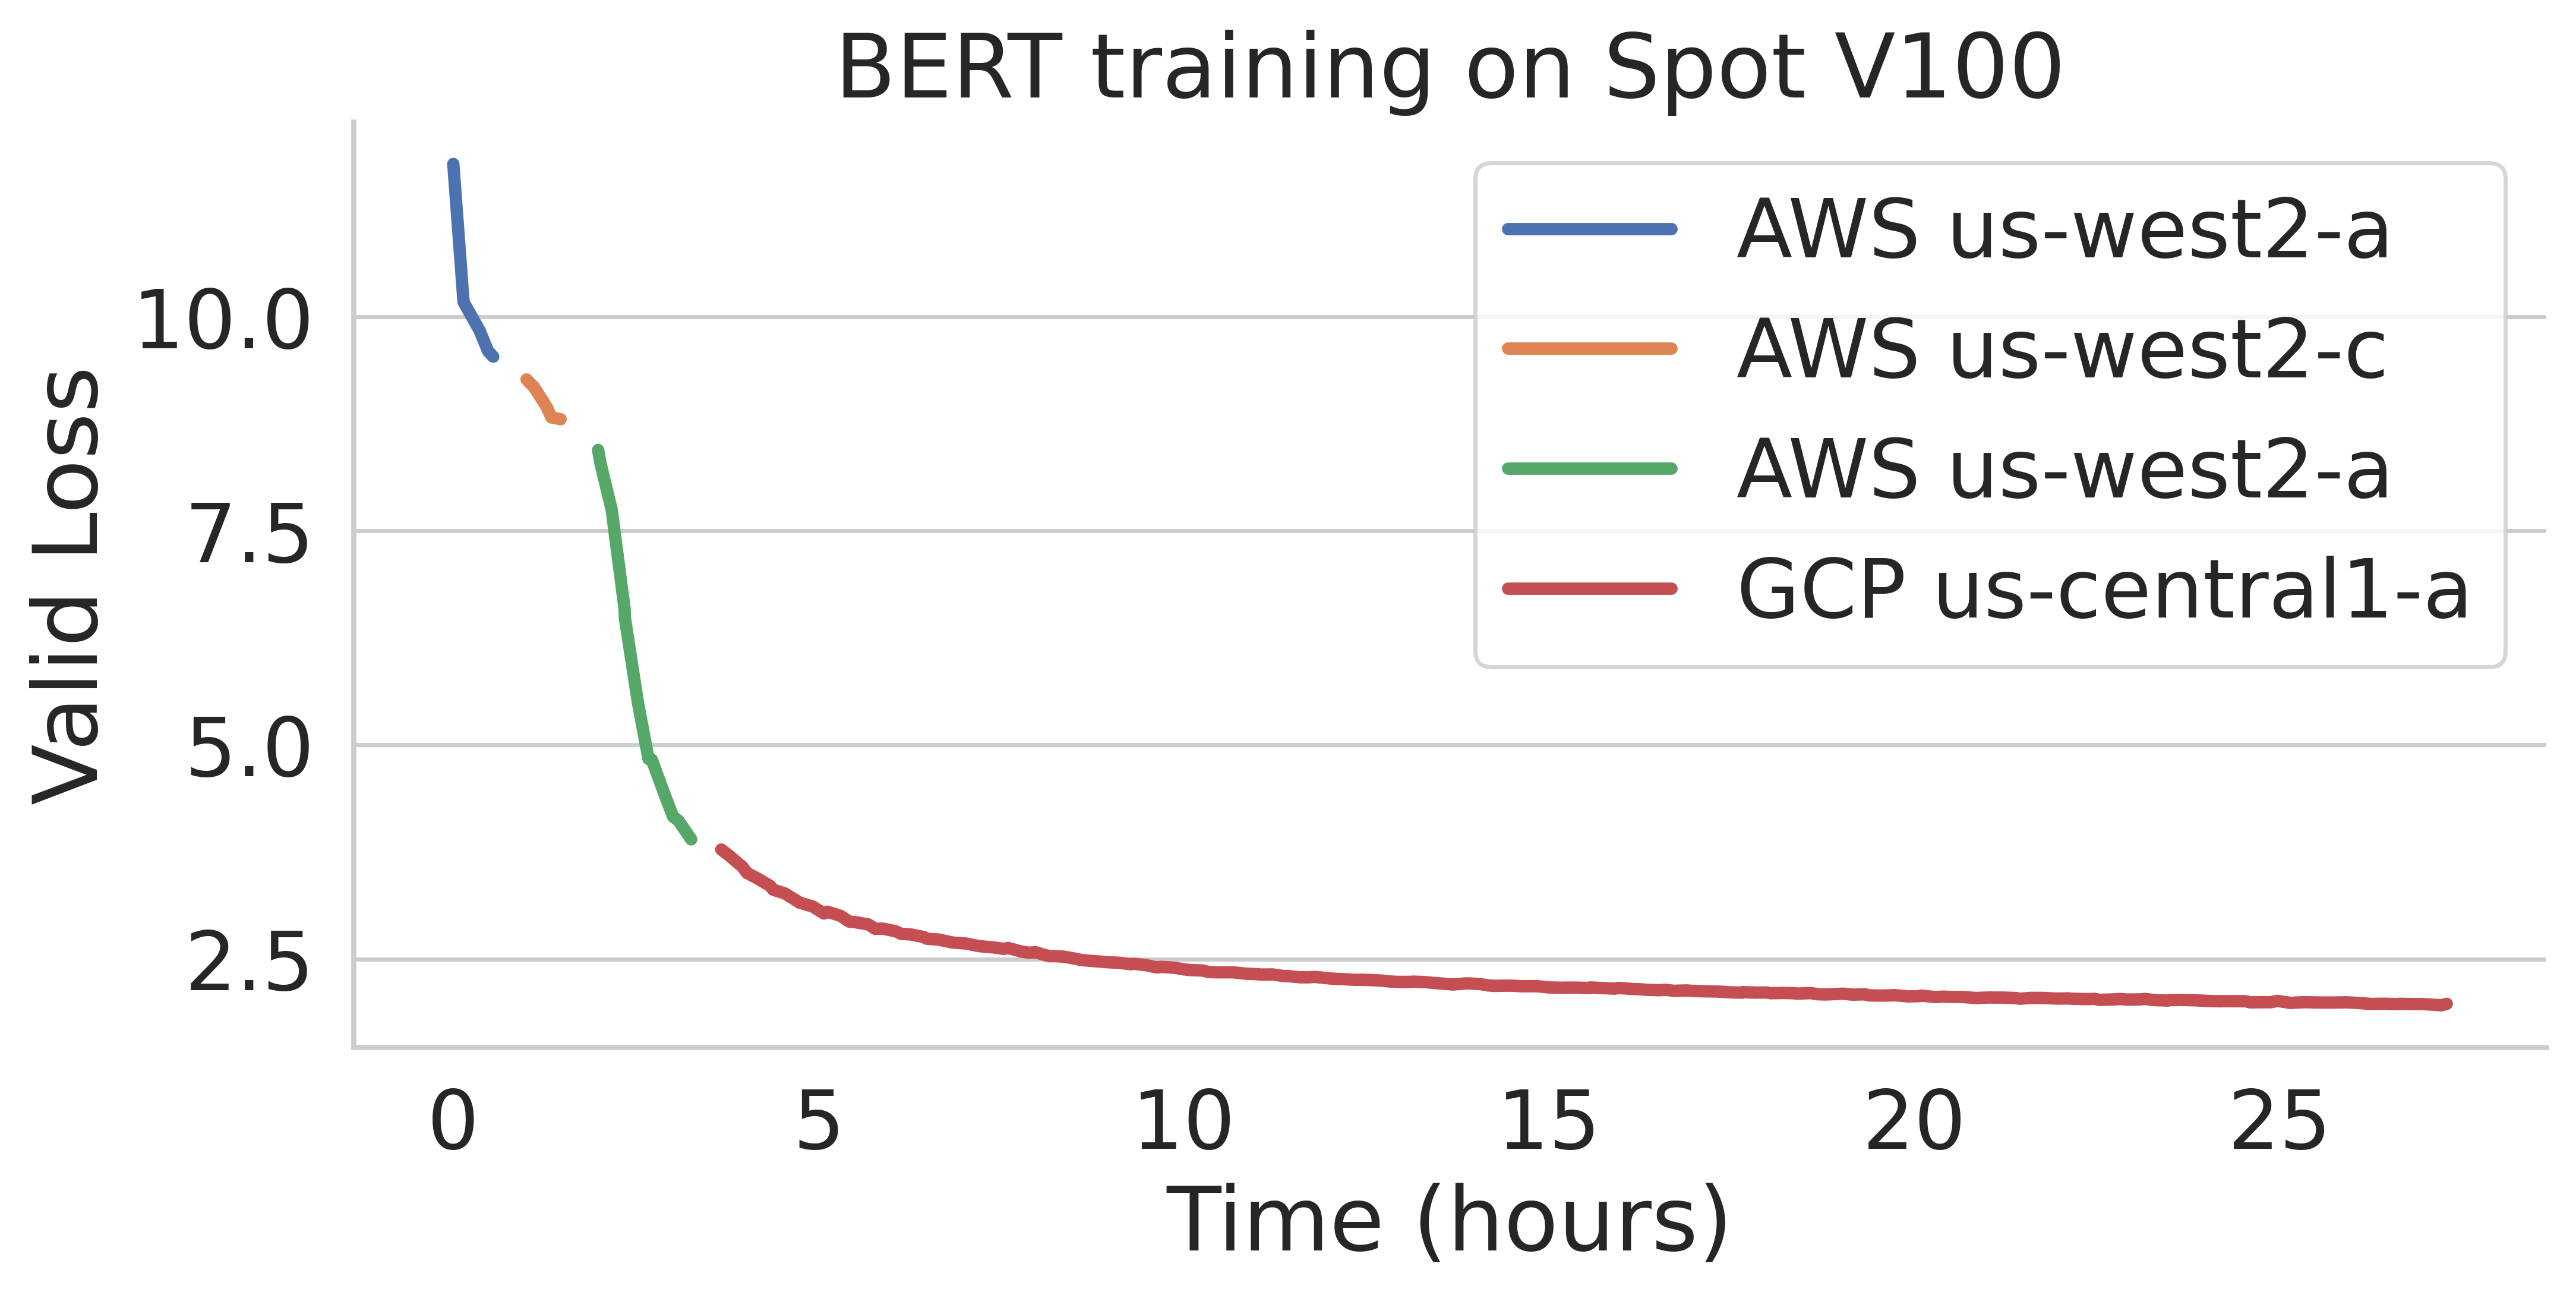 BERT training on Spot V100